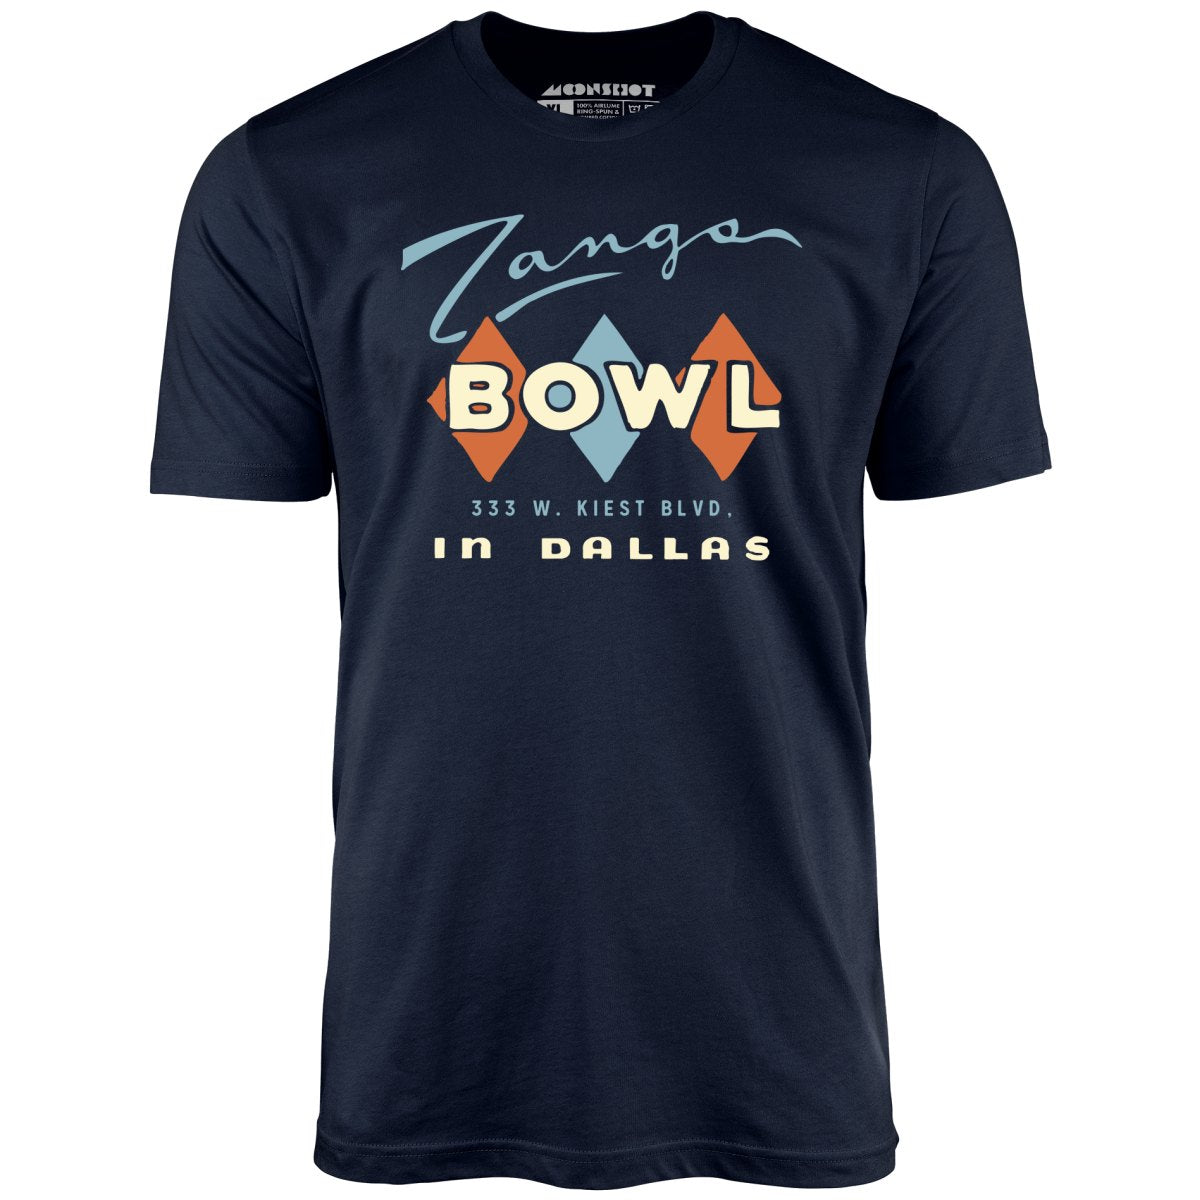 Zangs Bowl - Dallas, TX - Vintage Bowling Alley - Unisex T-Shirt